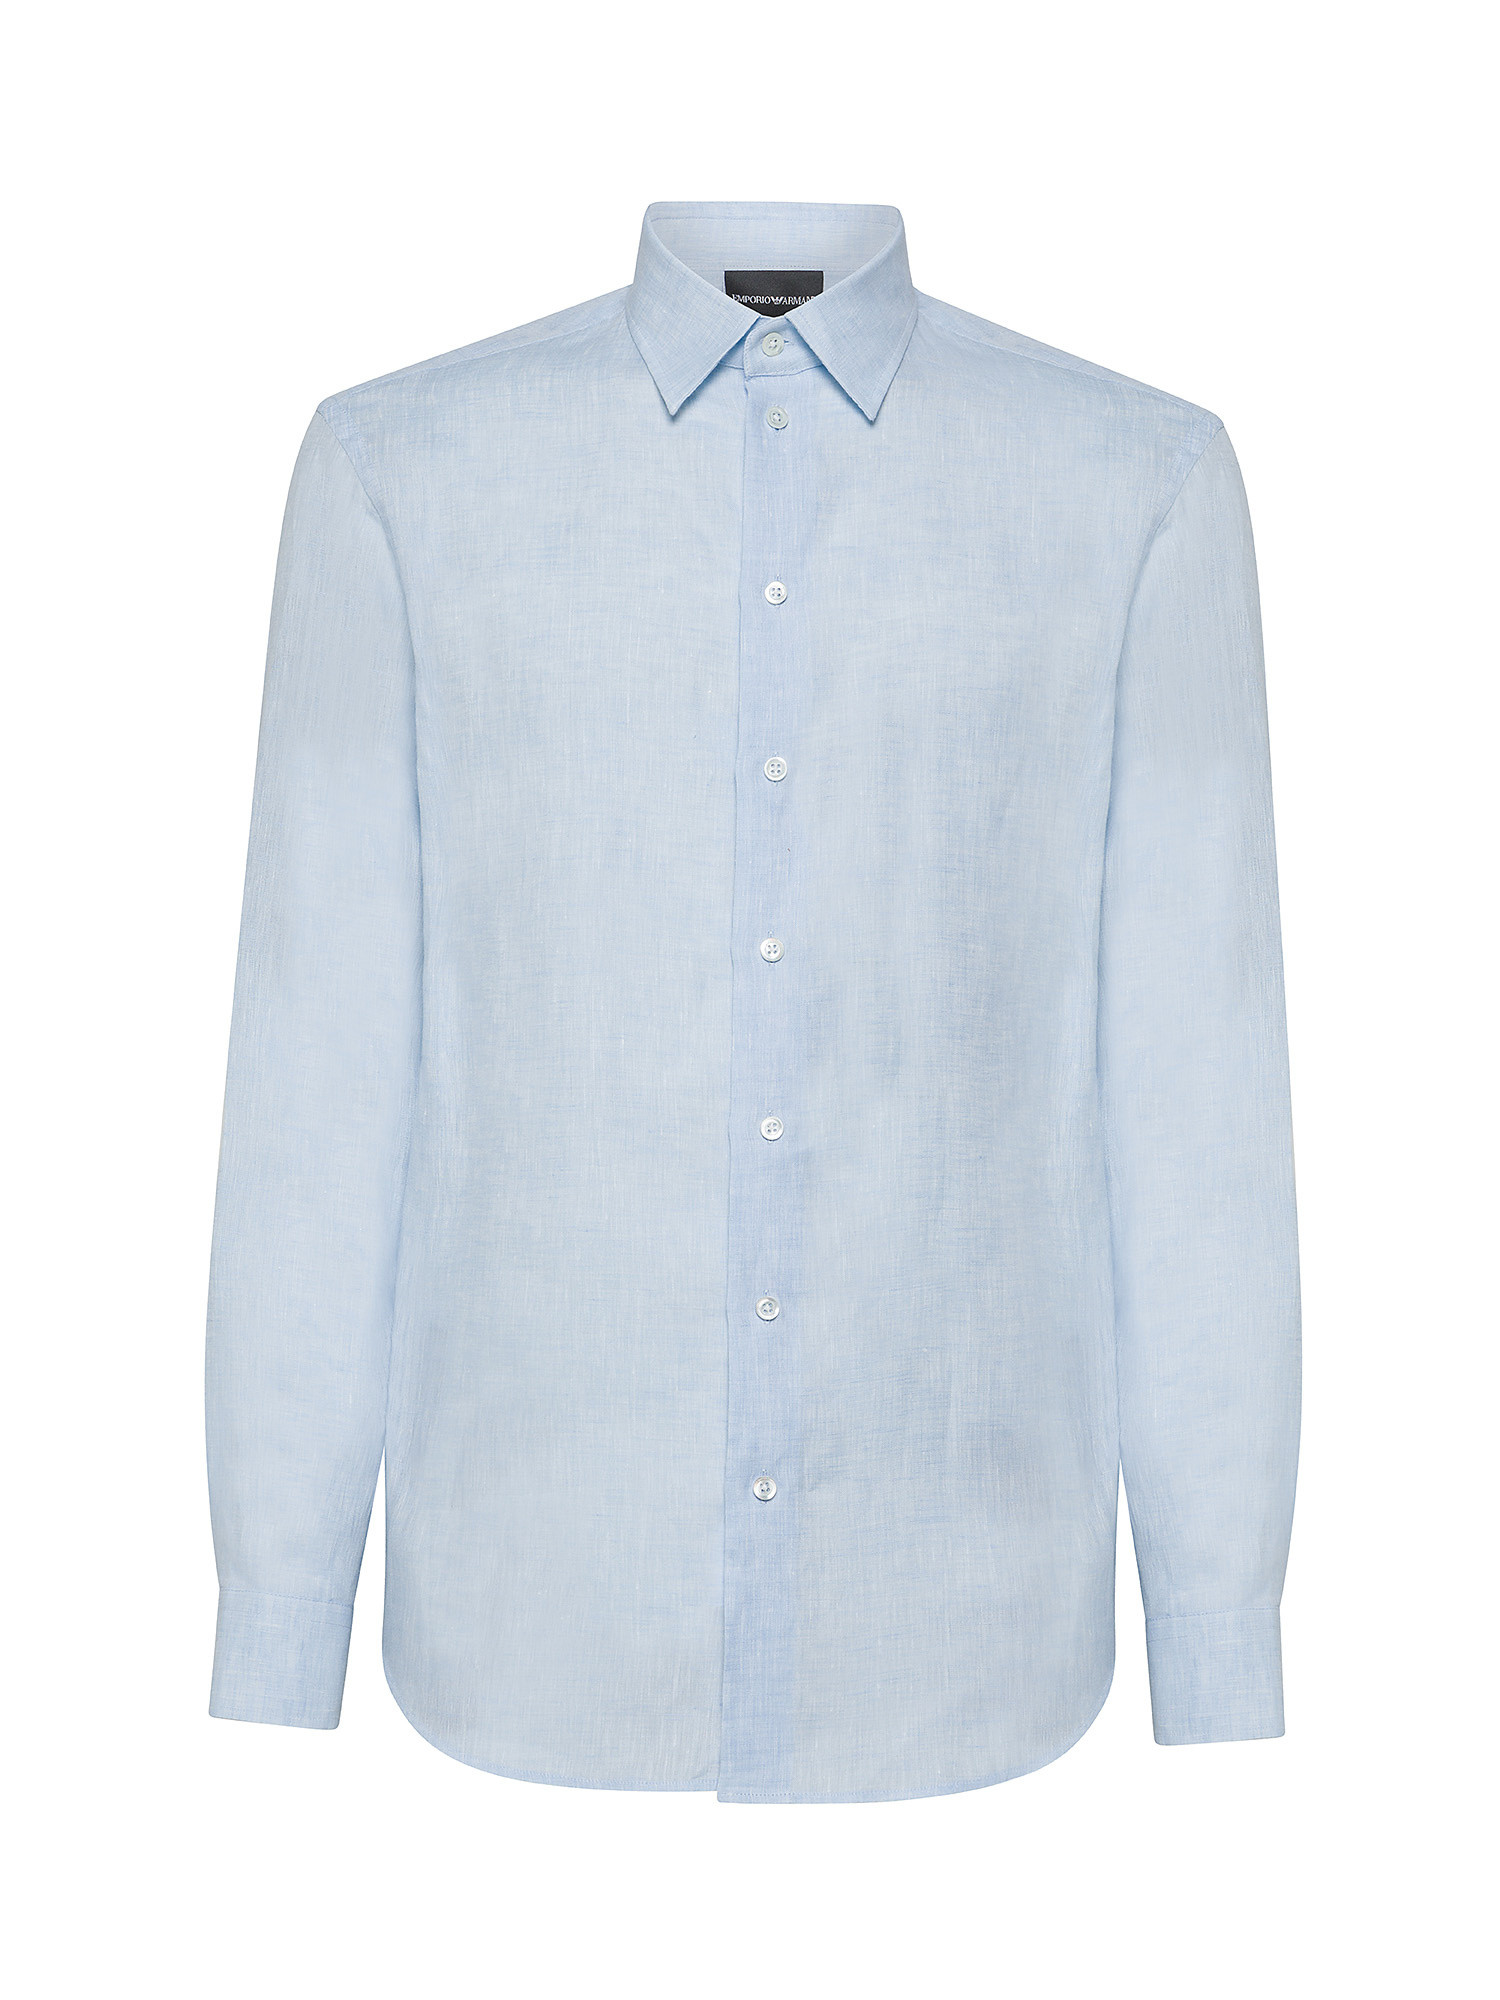 Emporio Armani - Camicia relaxed fit in puro lino, Azzurro, large image number 1